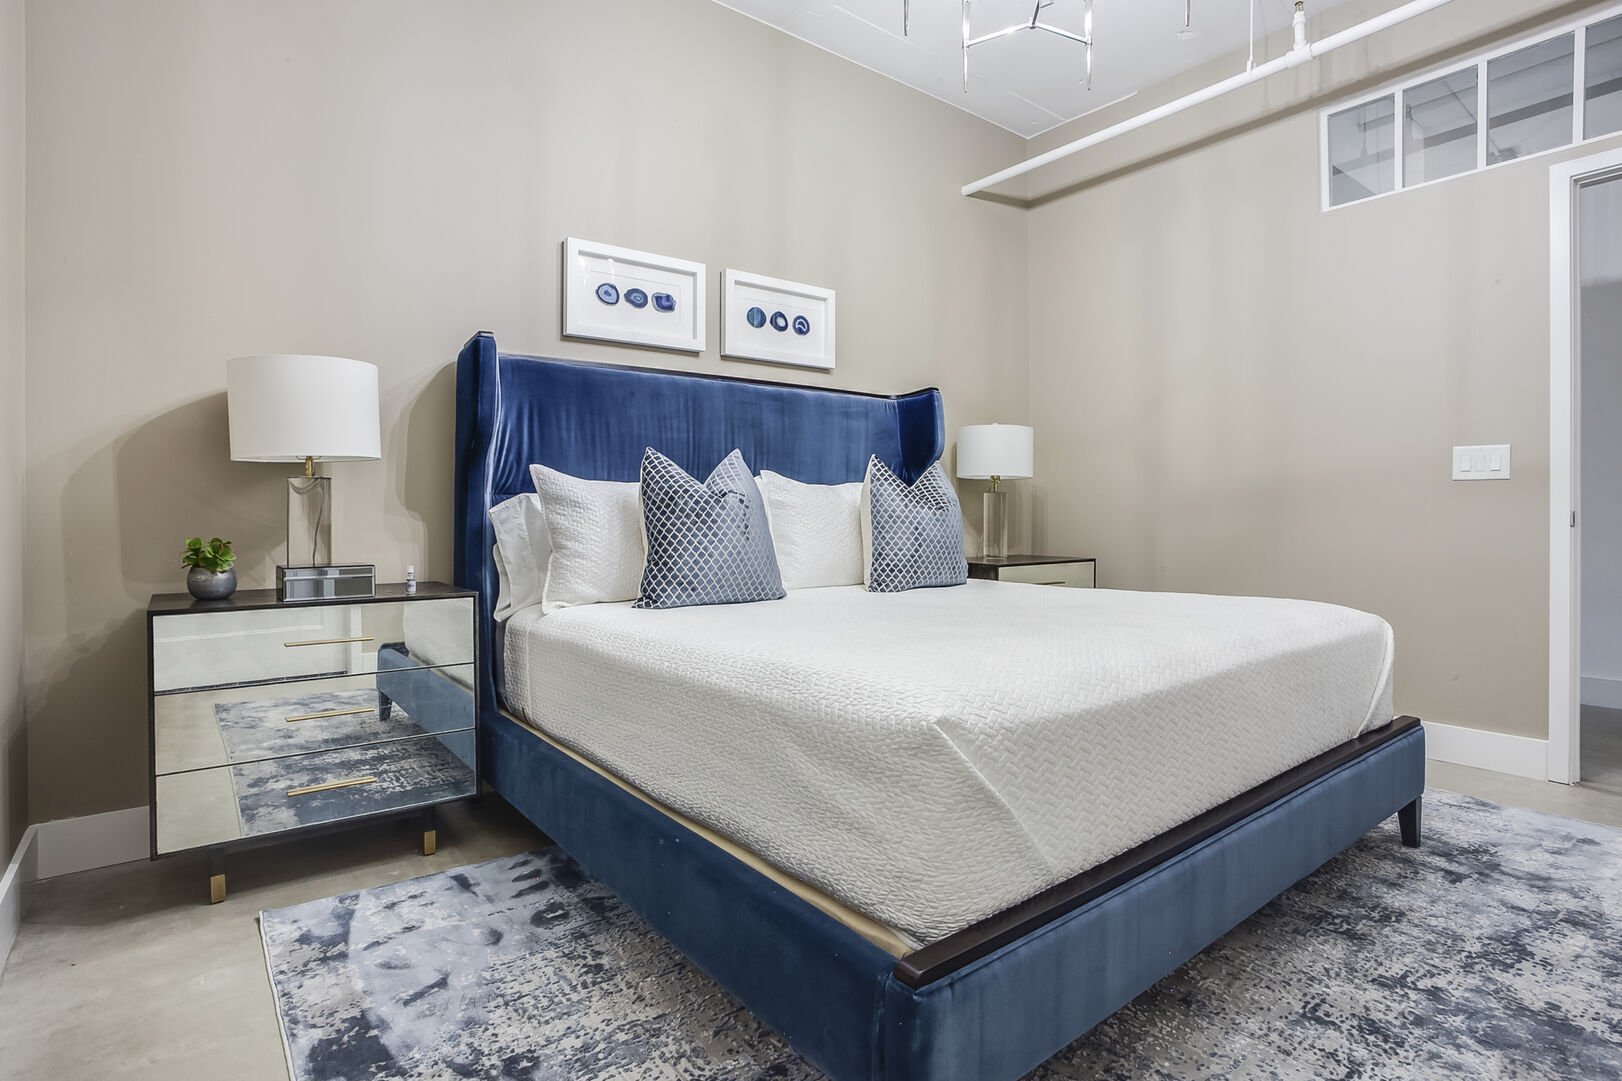 Cool Blue Design in the Master Bedroom